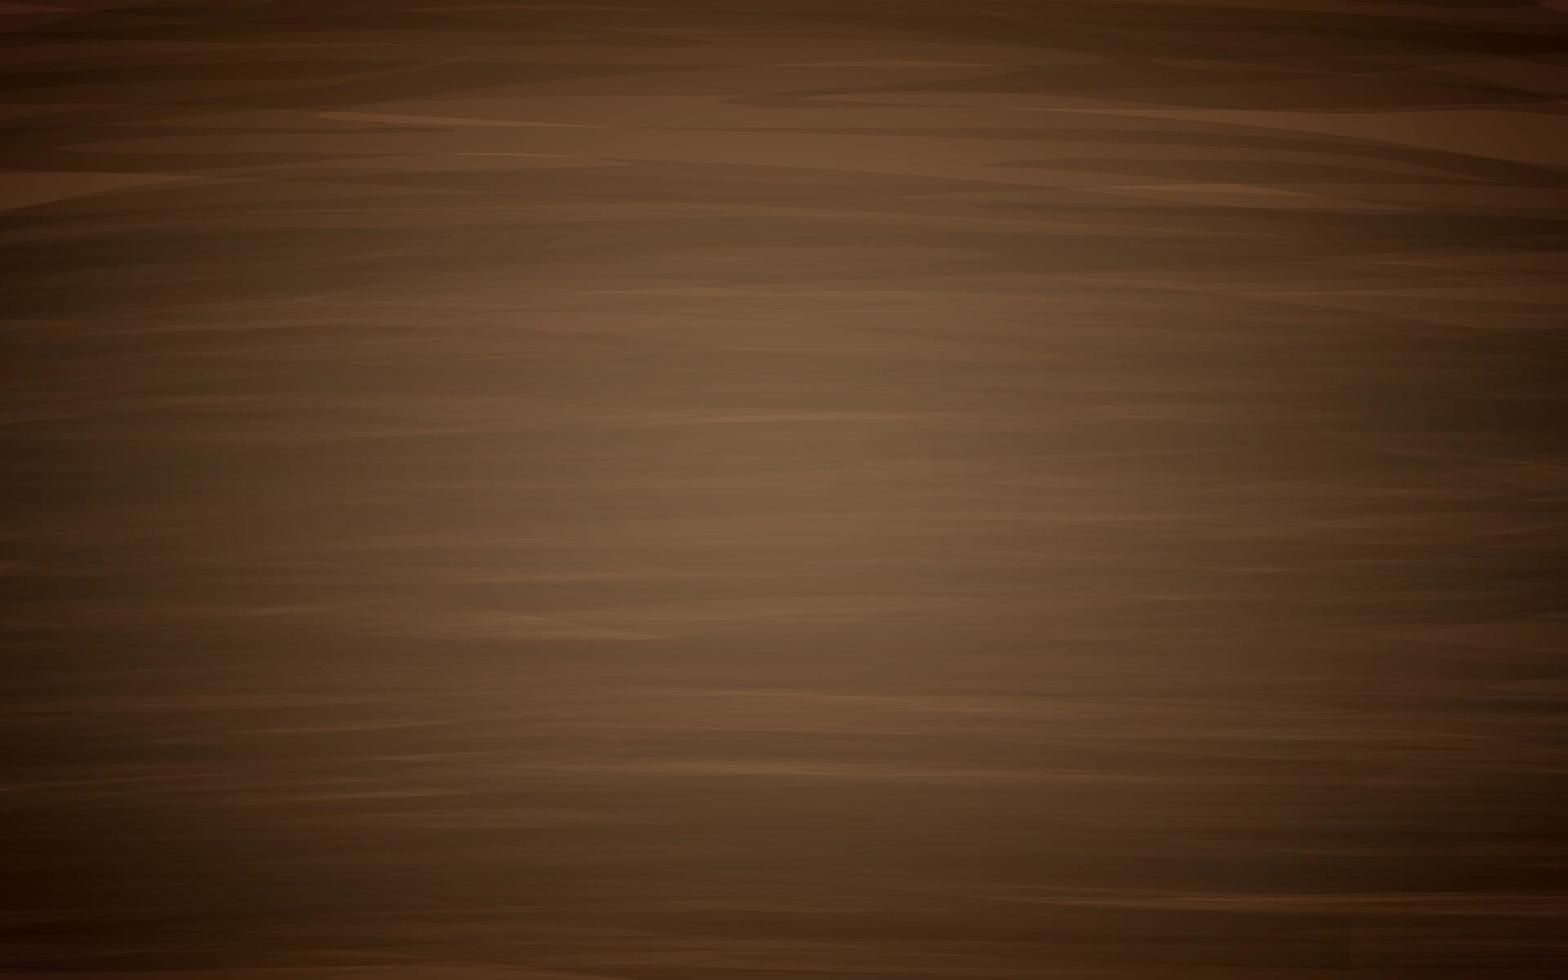 Brown Wood Texture Background vector